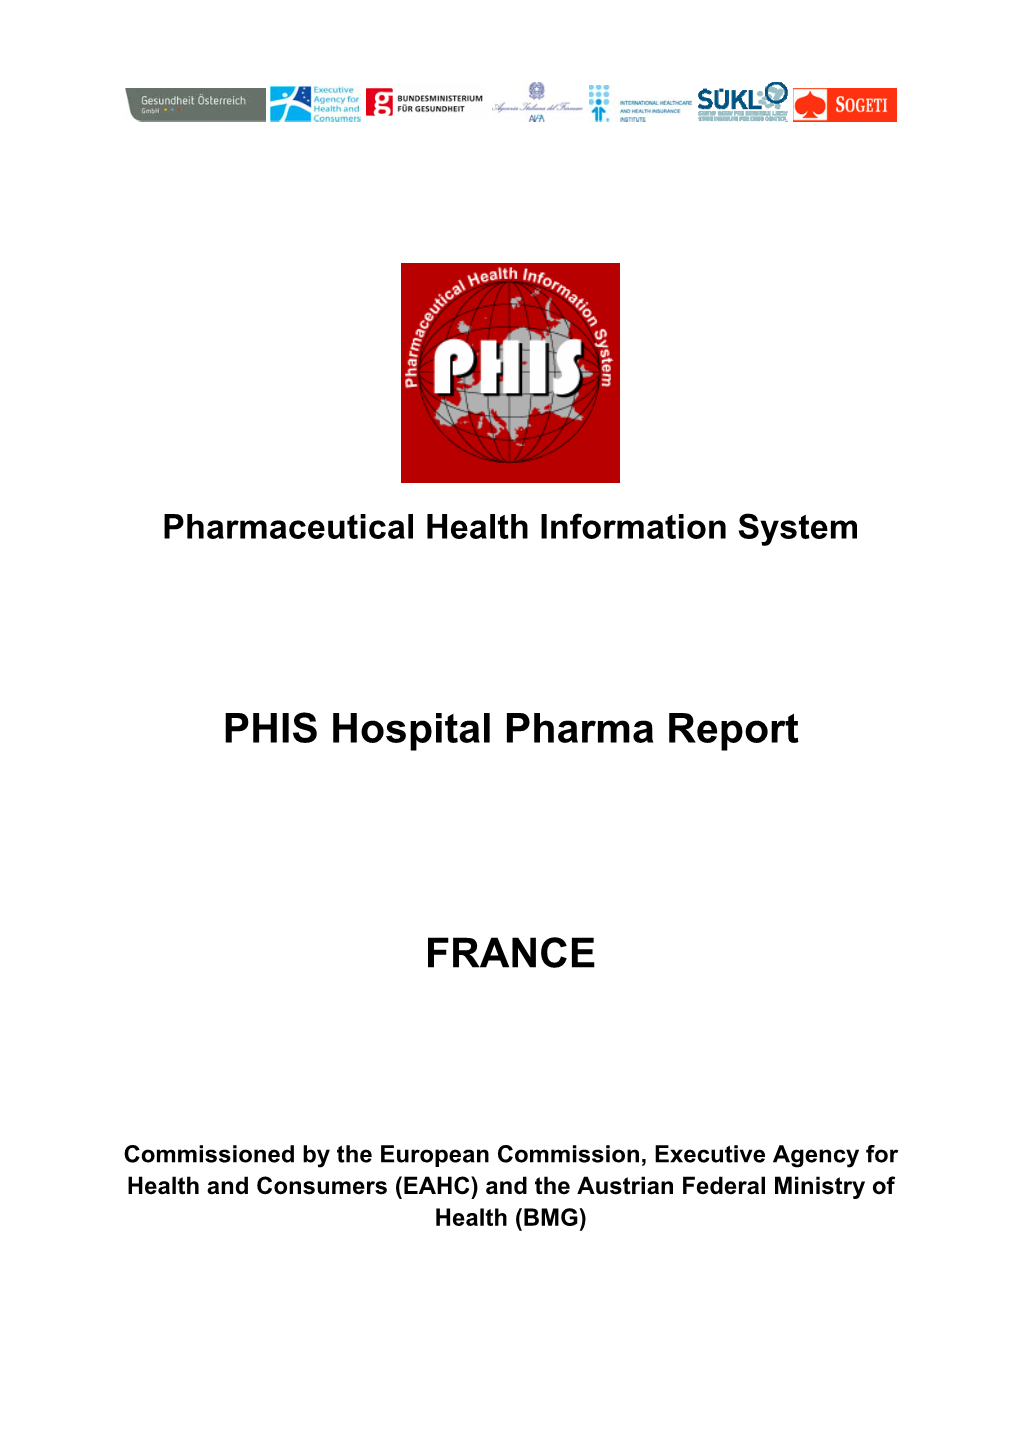 PHIS Hospital Pharma Report France 2009